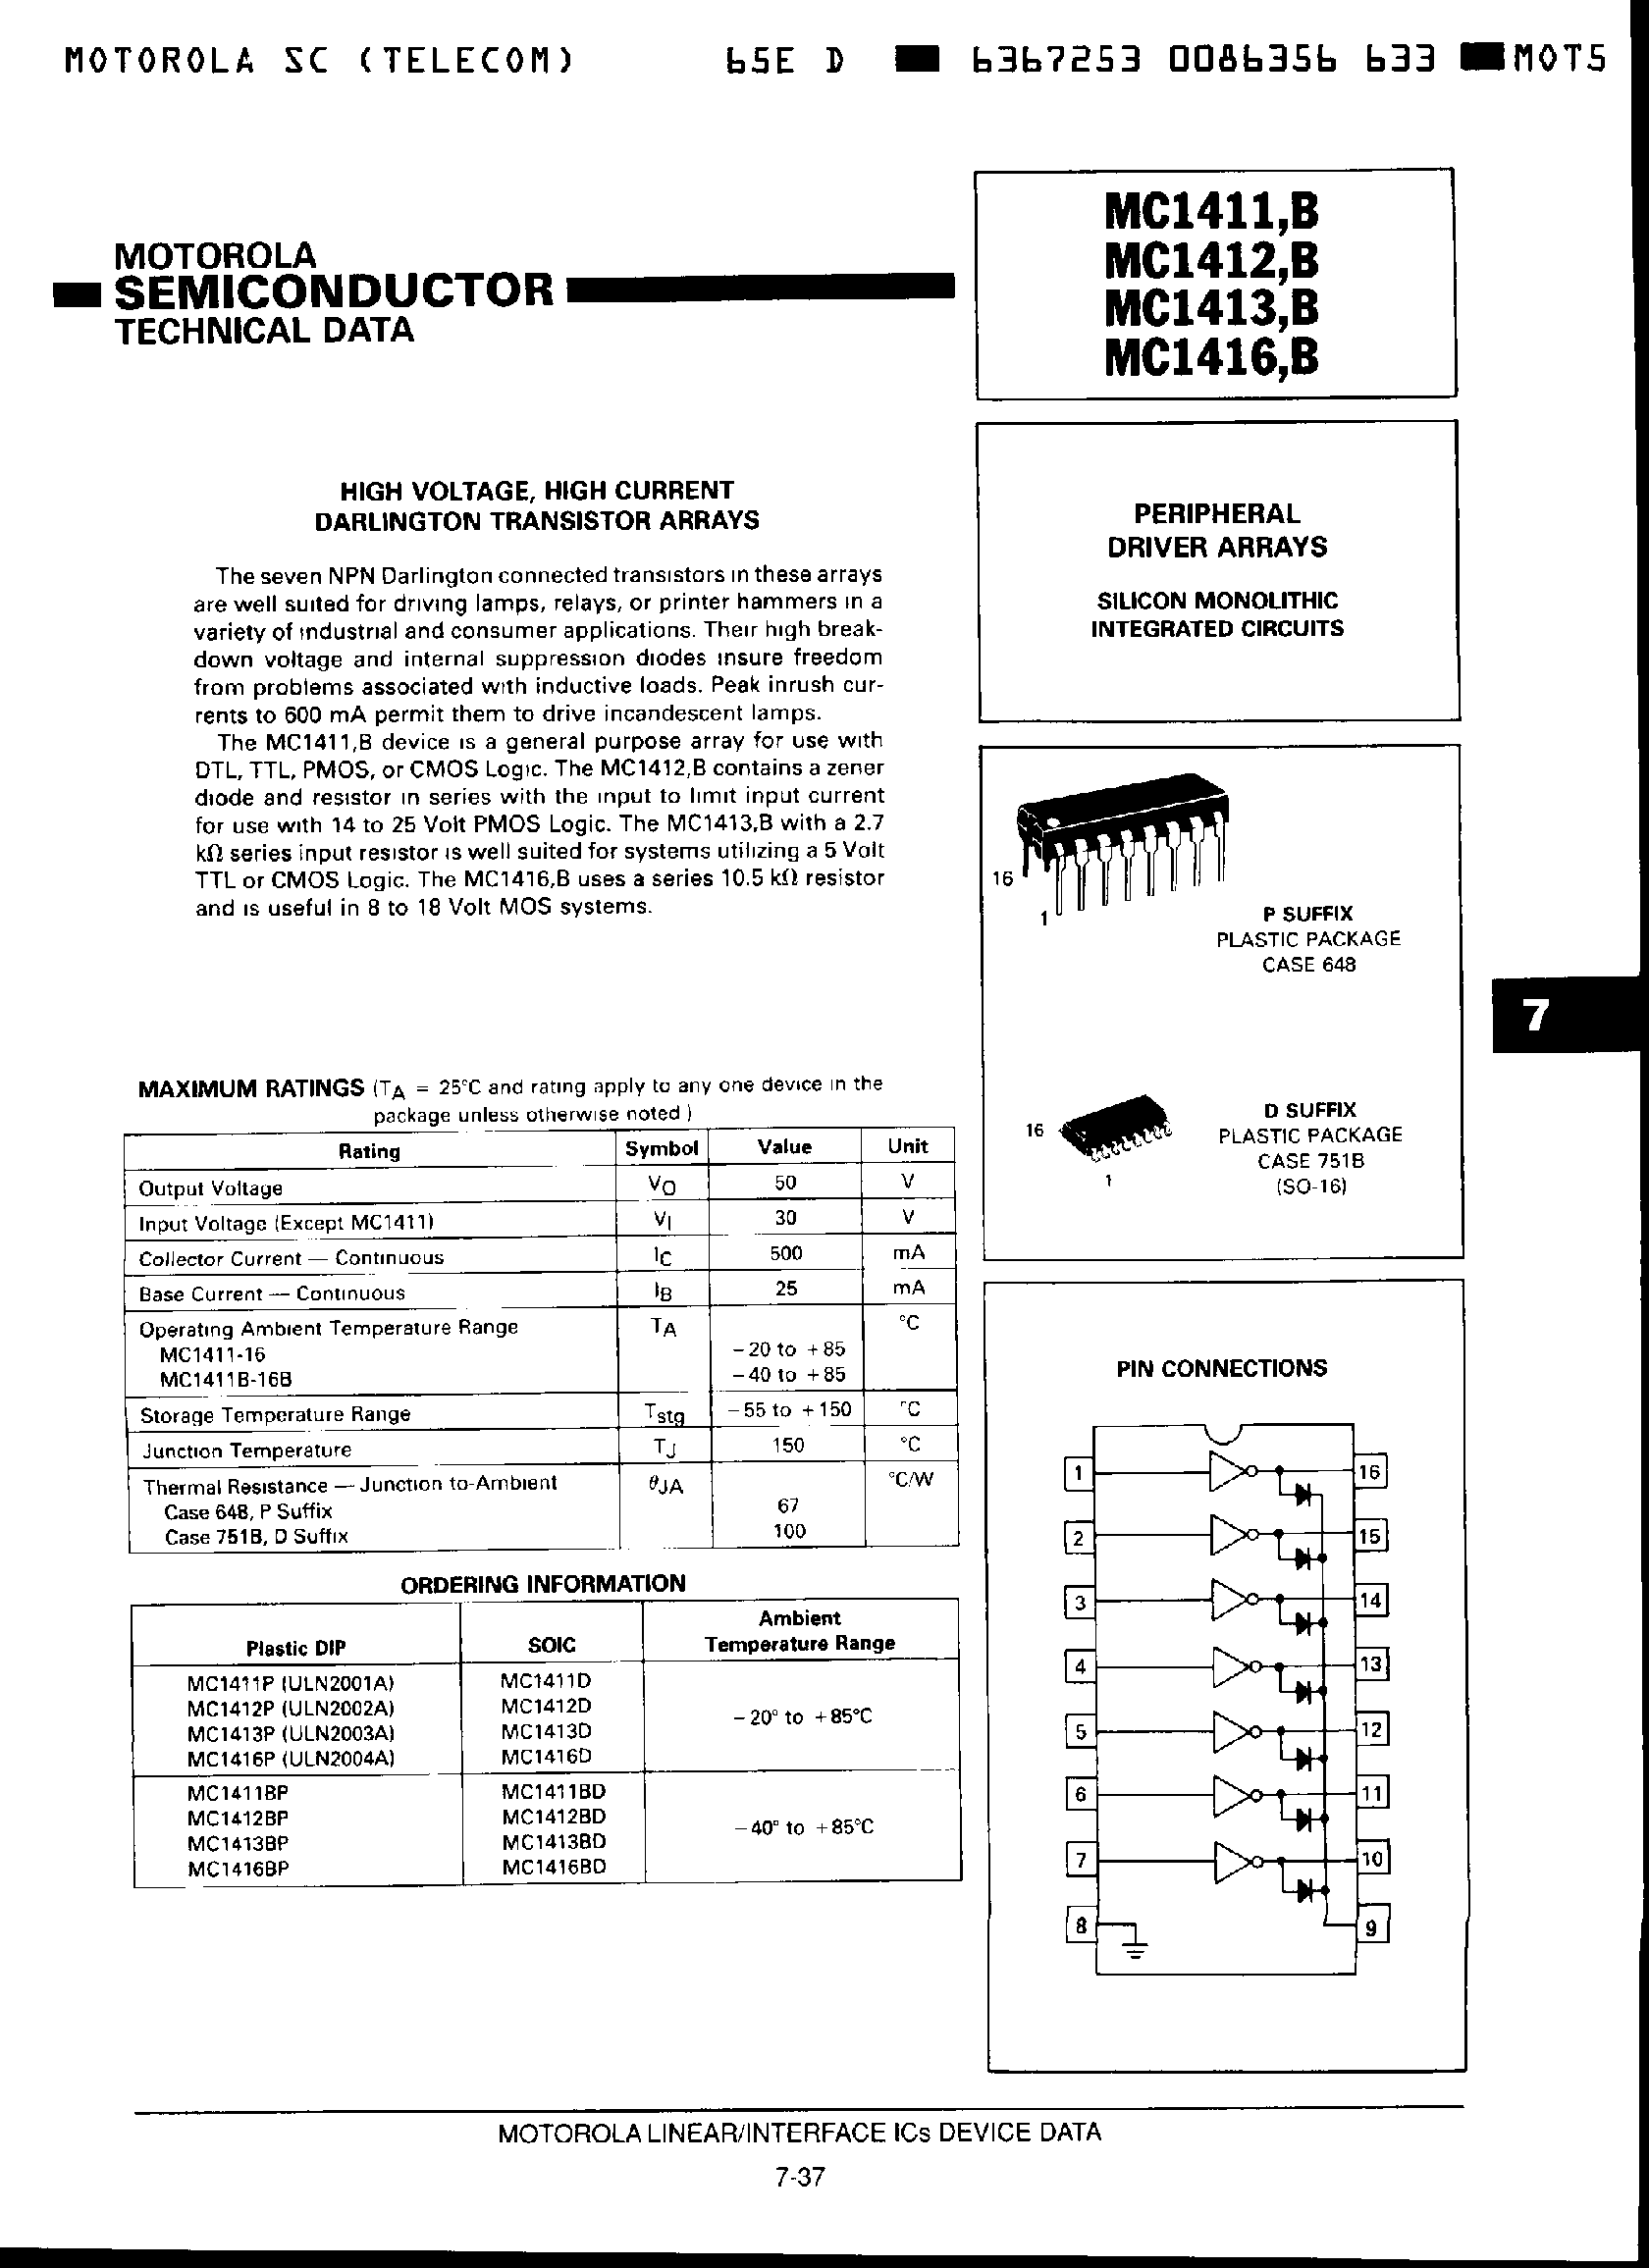 Datasheet MC1416P - PERIPHERAL DRIVER ARRAYS page 1